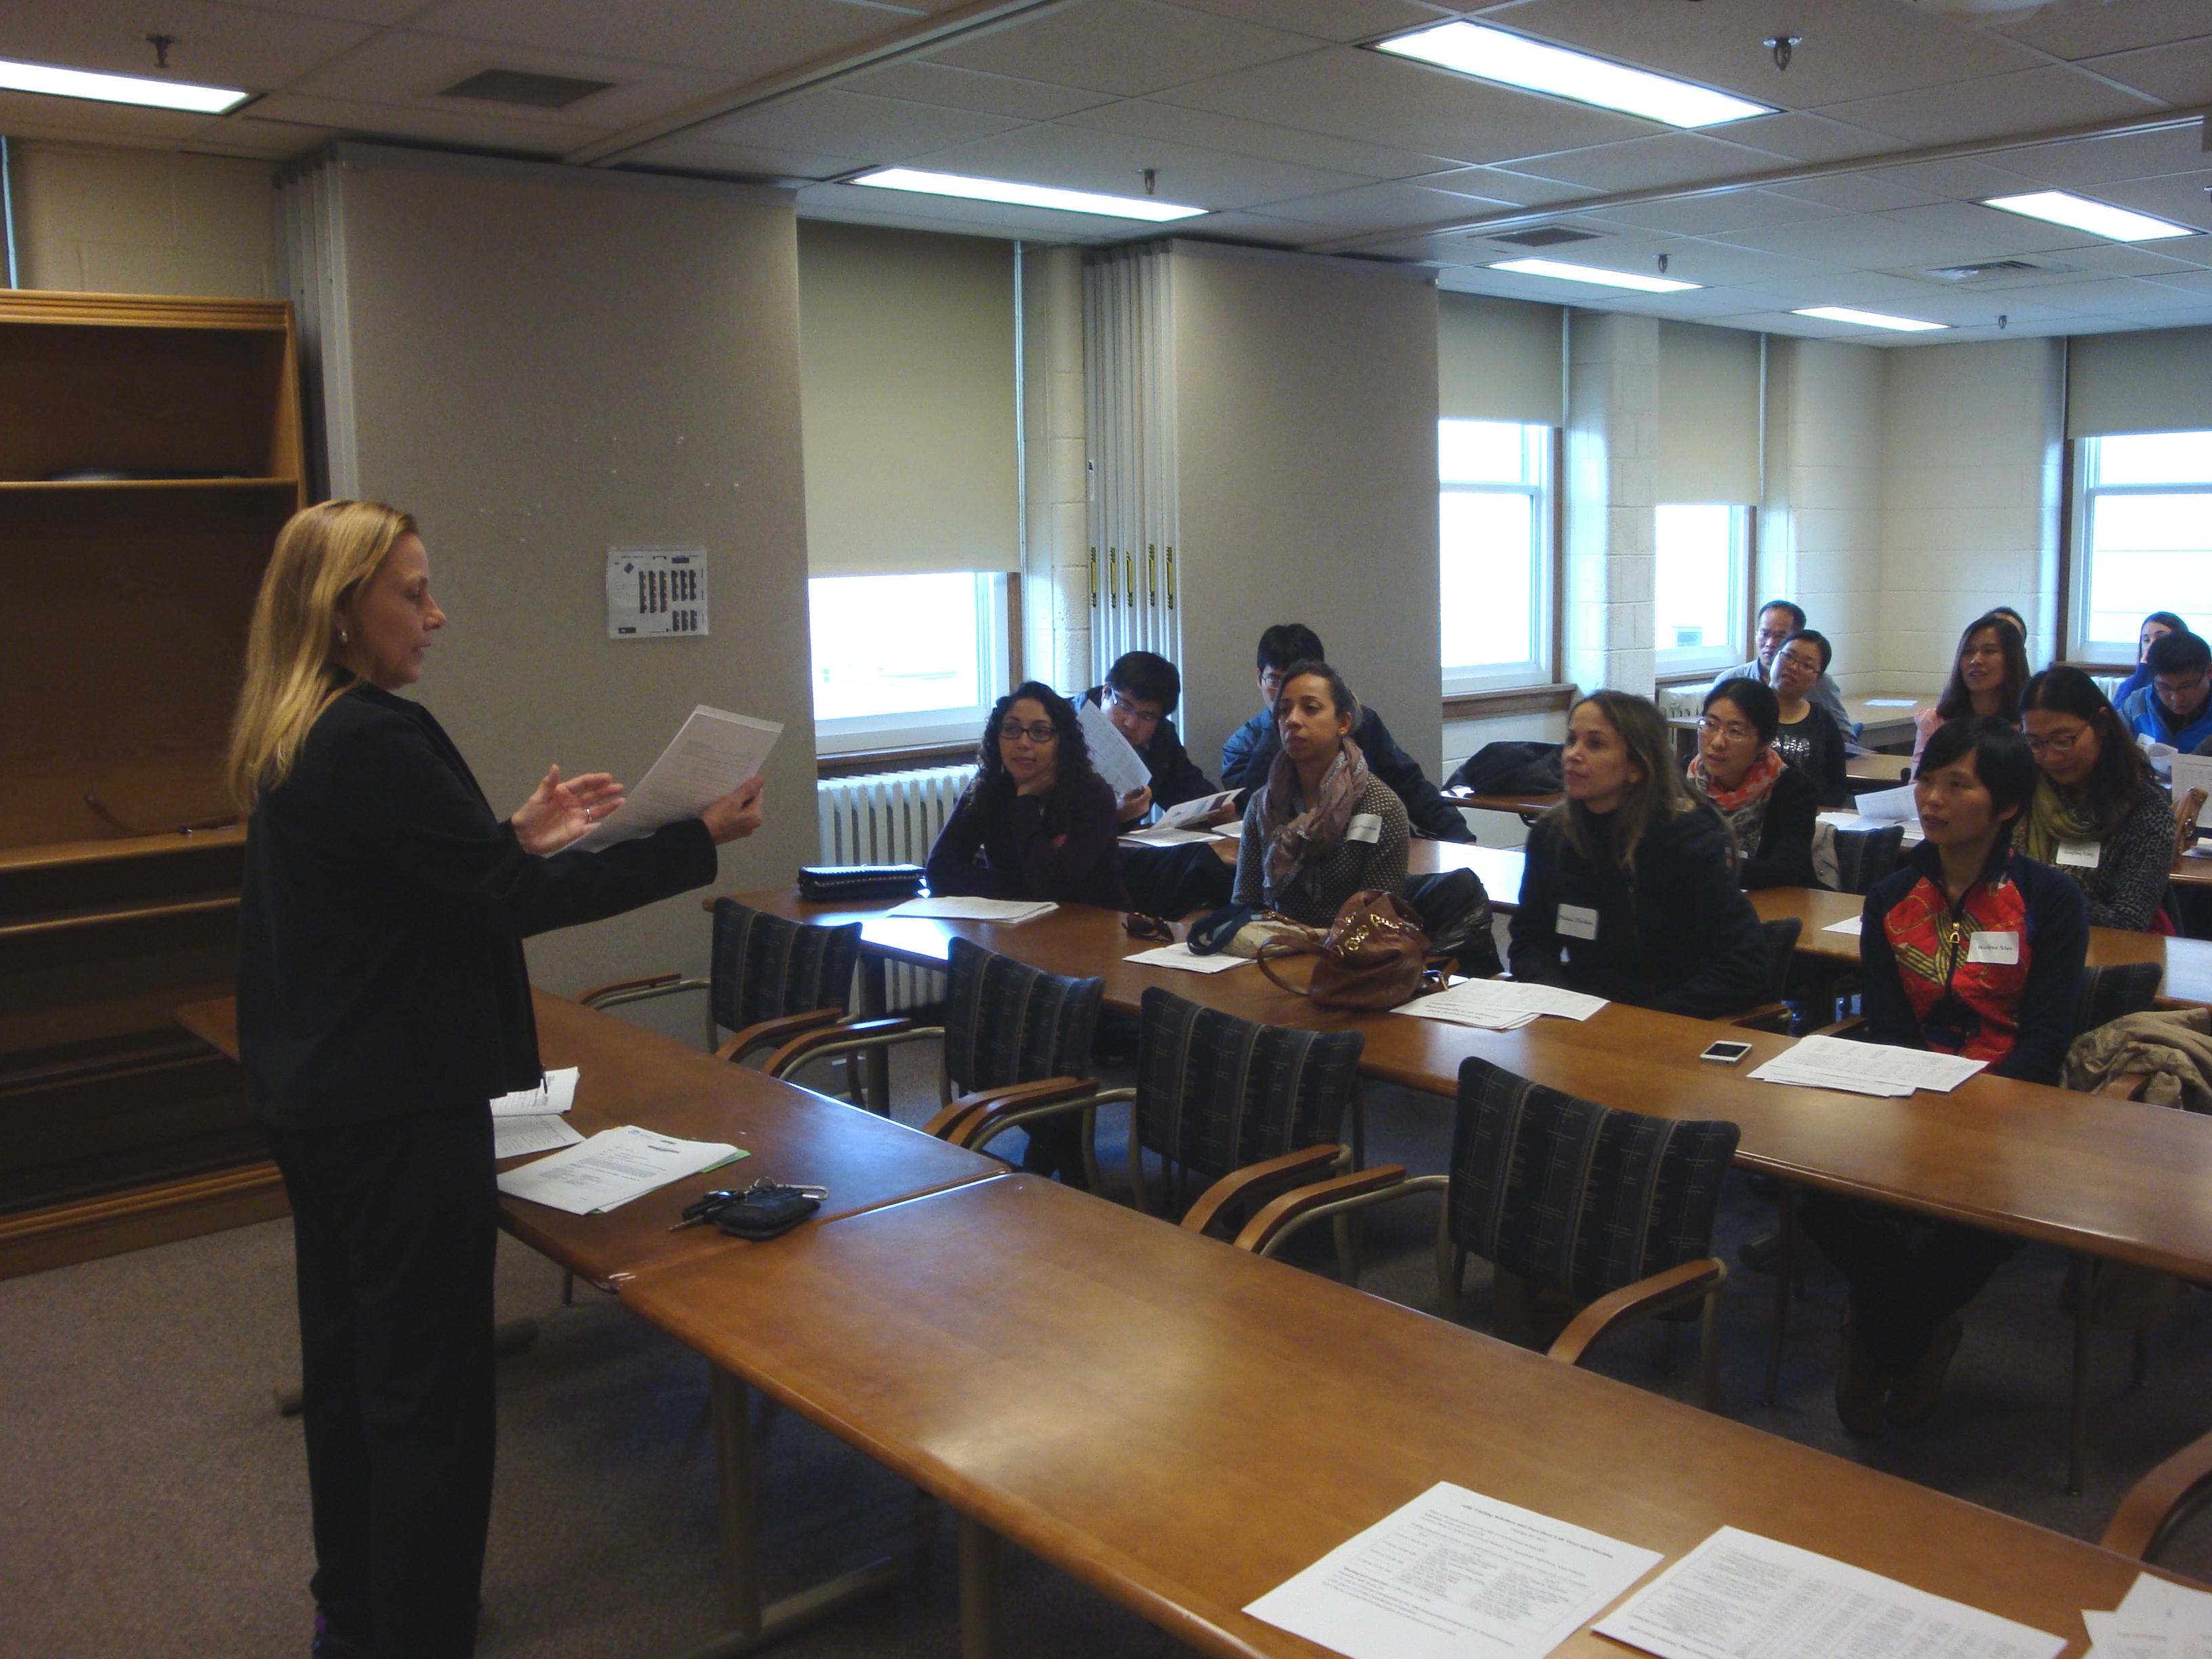 Graduate Program Administrator Gail Biberstine explains some administrative processes related to visiting scholars